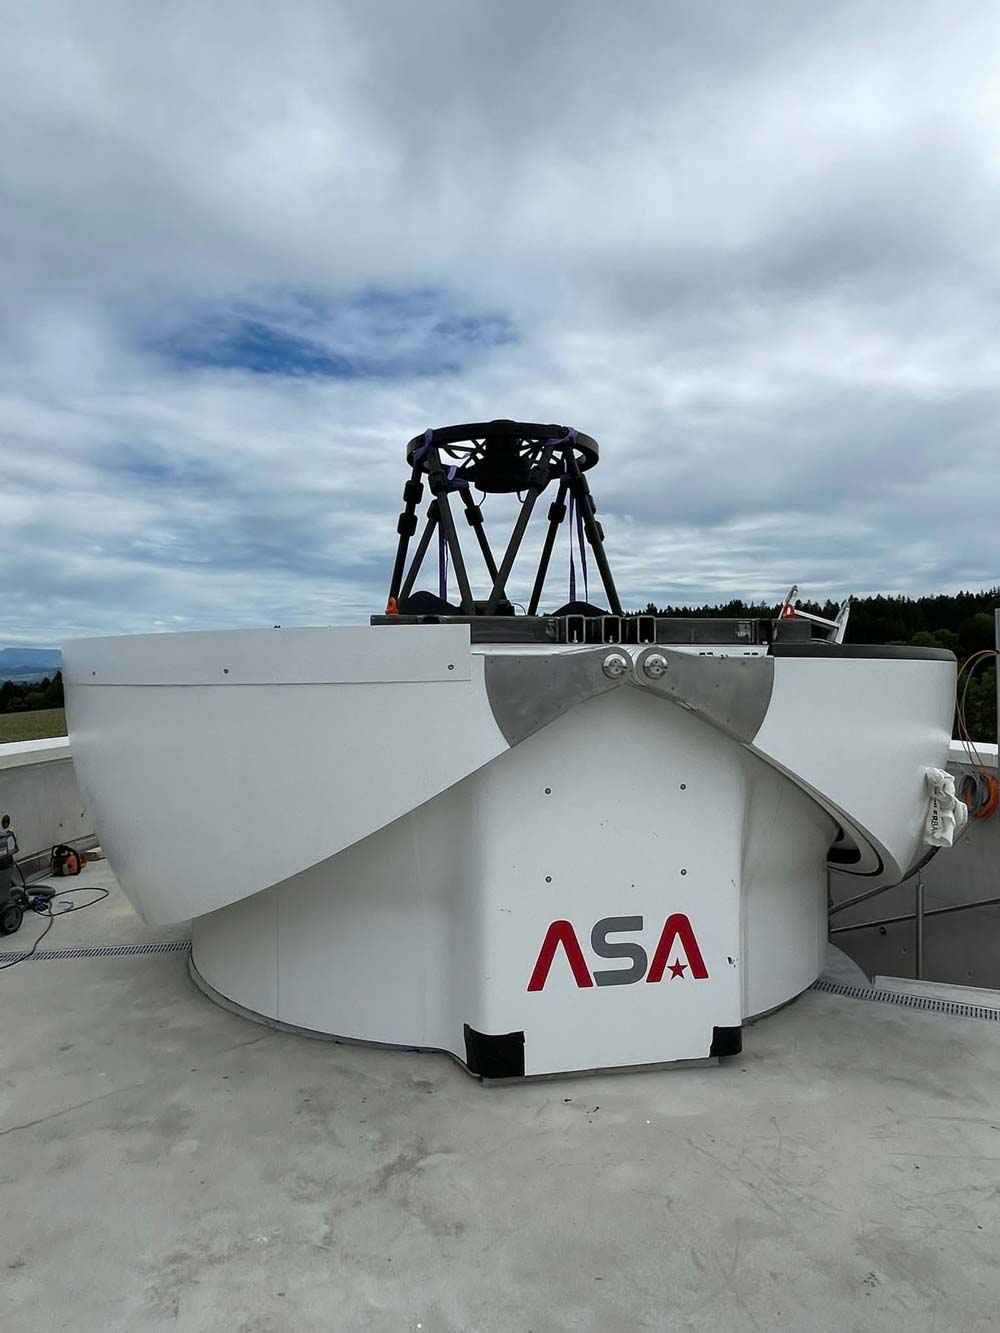 ASA - pioneering work, large telescope